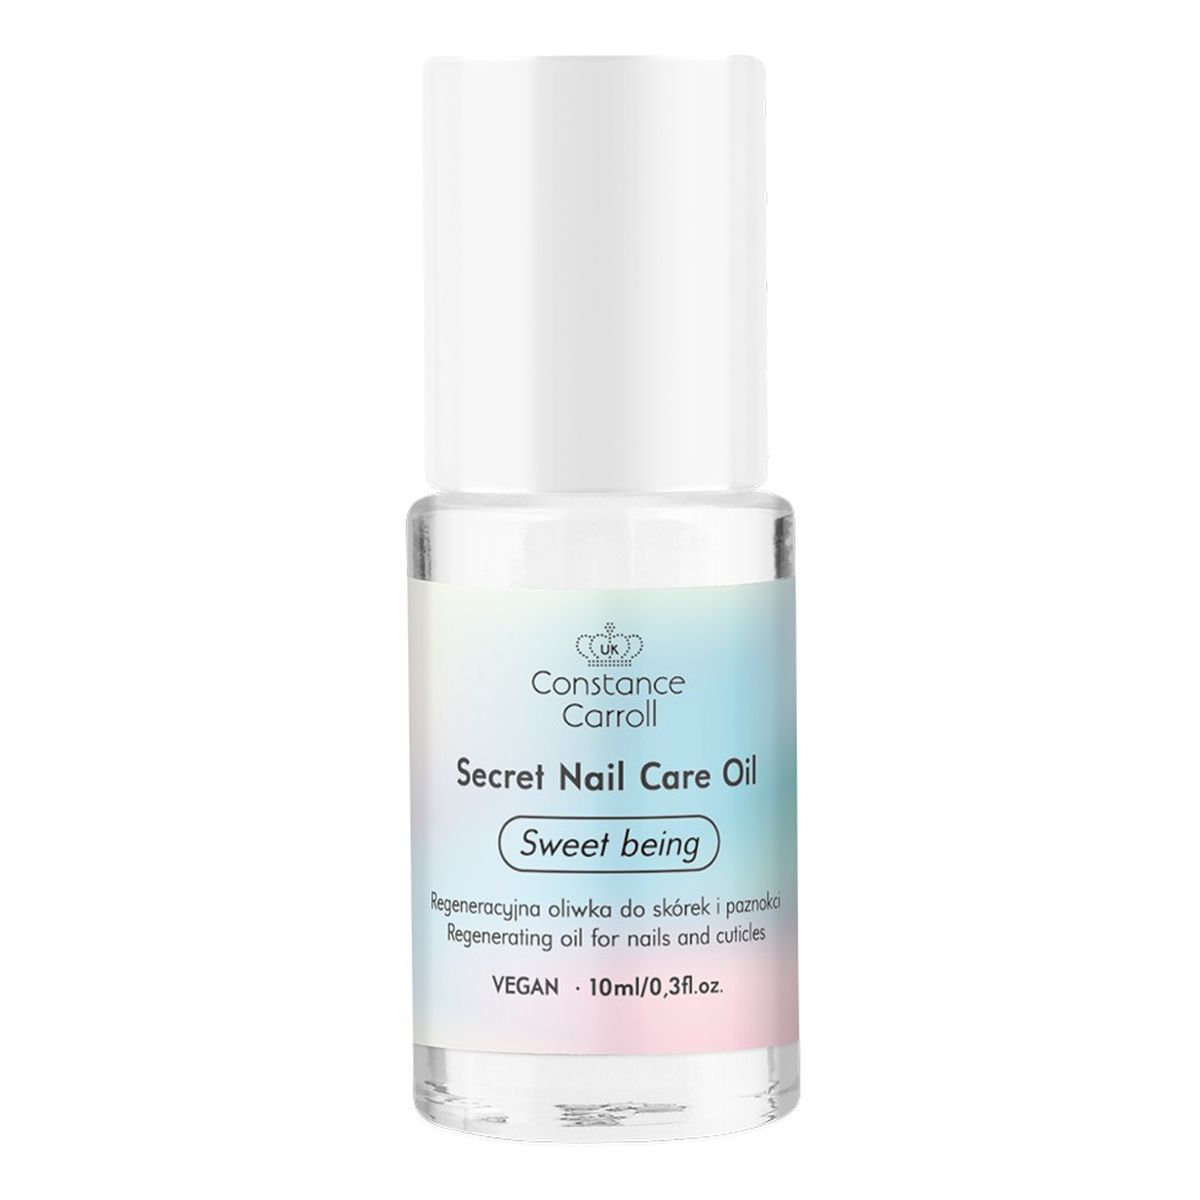 Constance Carroll Secret Nail Care Oil Regeneracyjna Oliwka do skórek i paznokci - Sweet Being 10ml